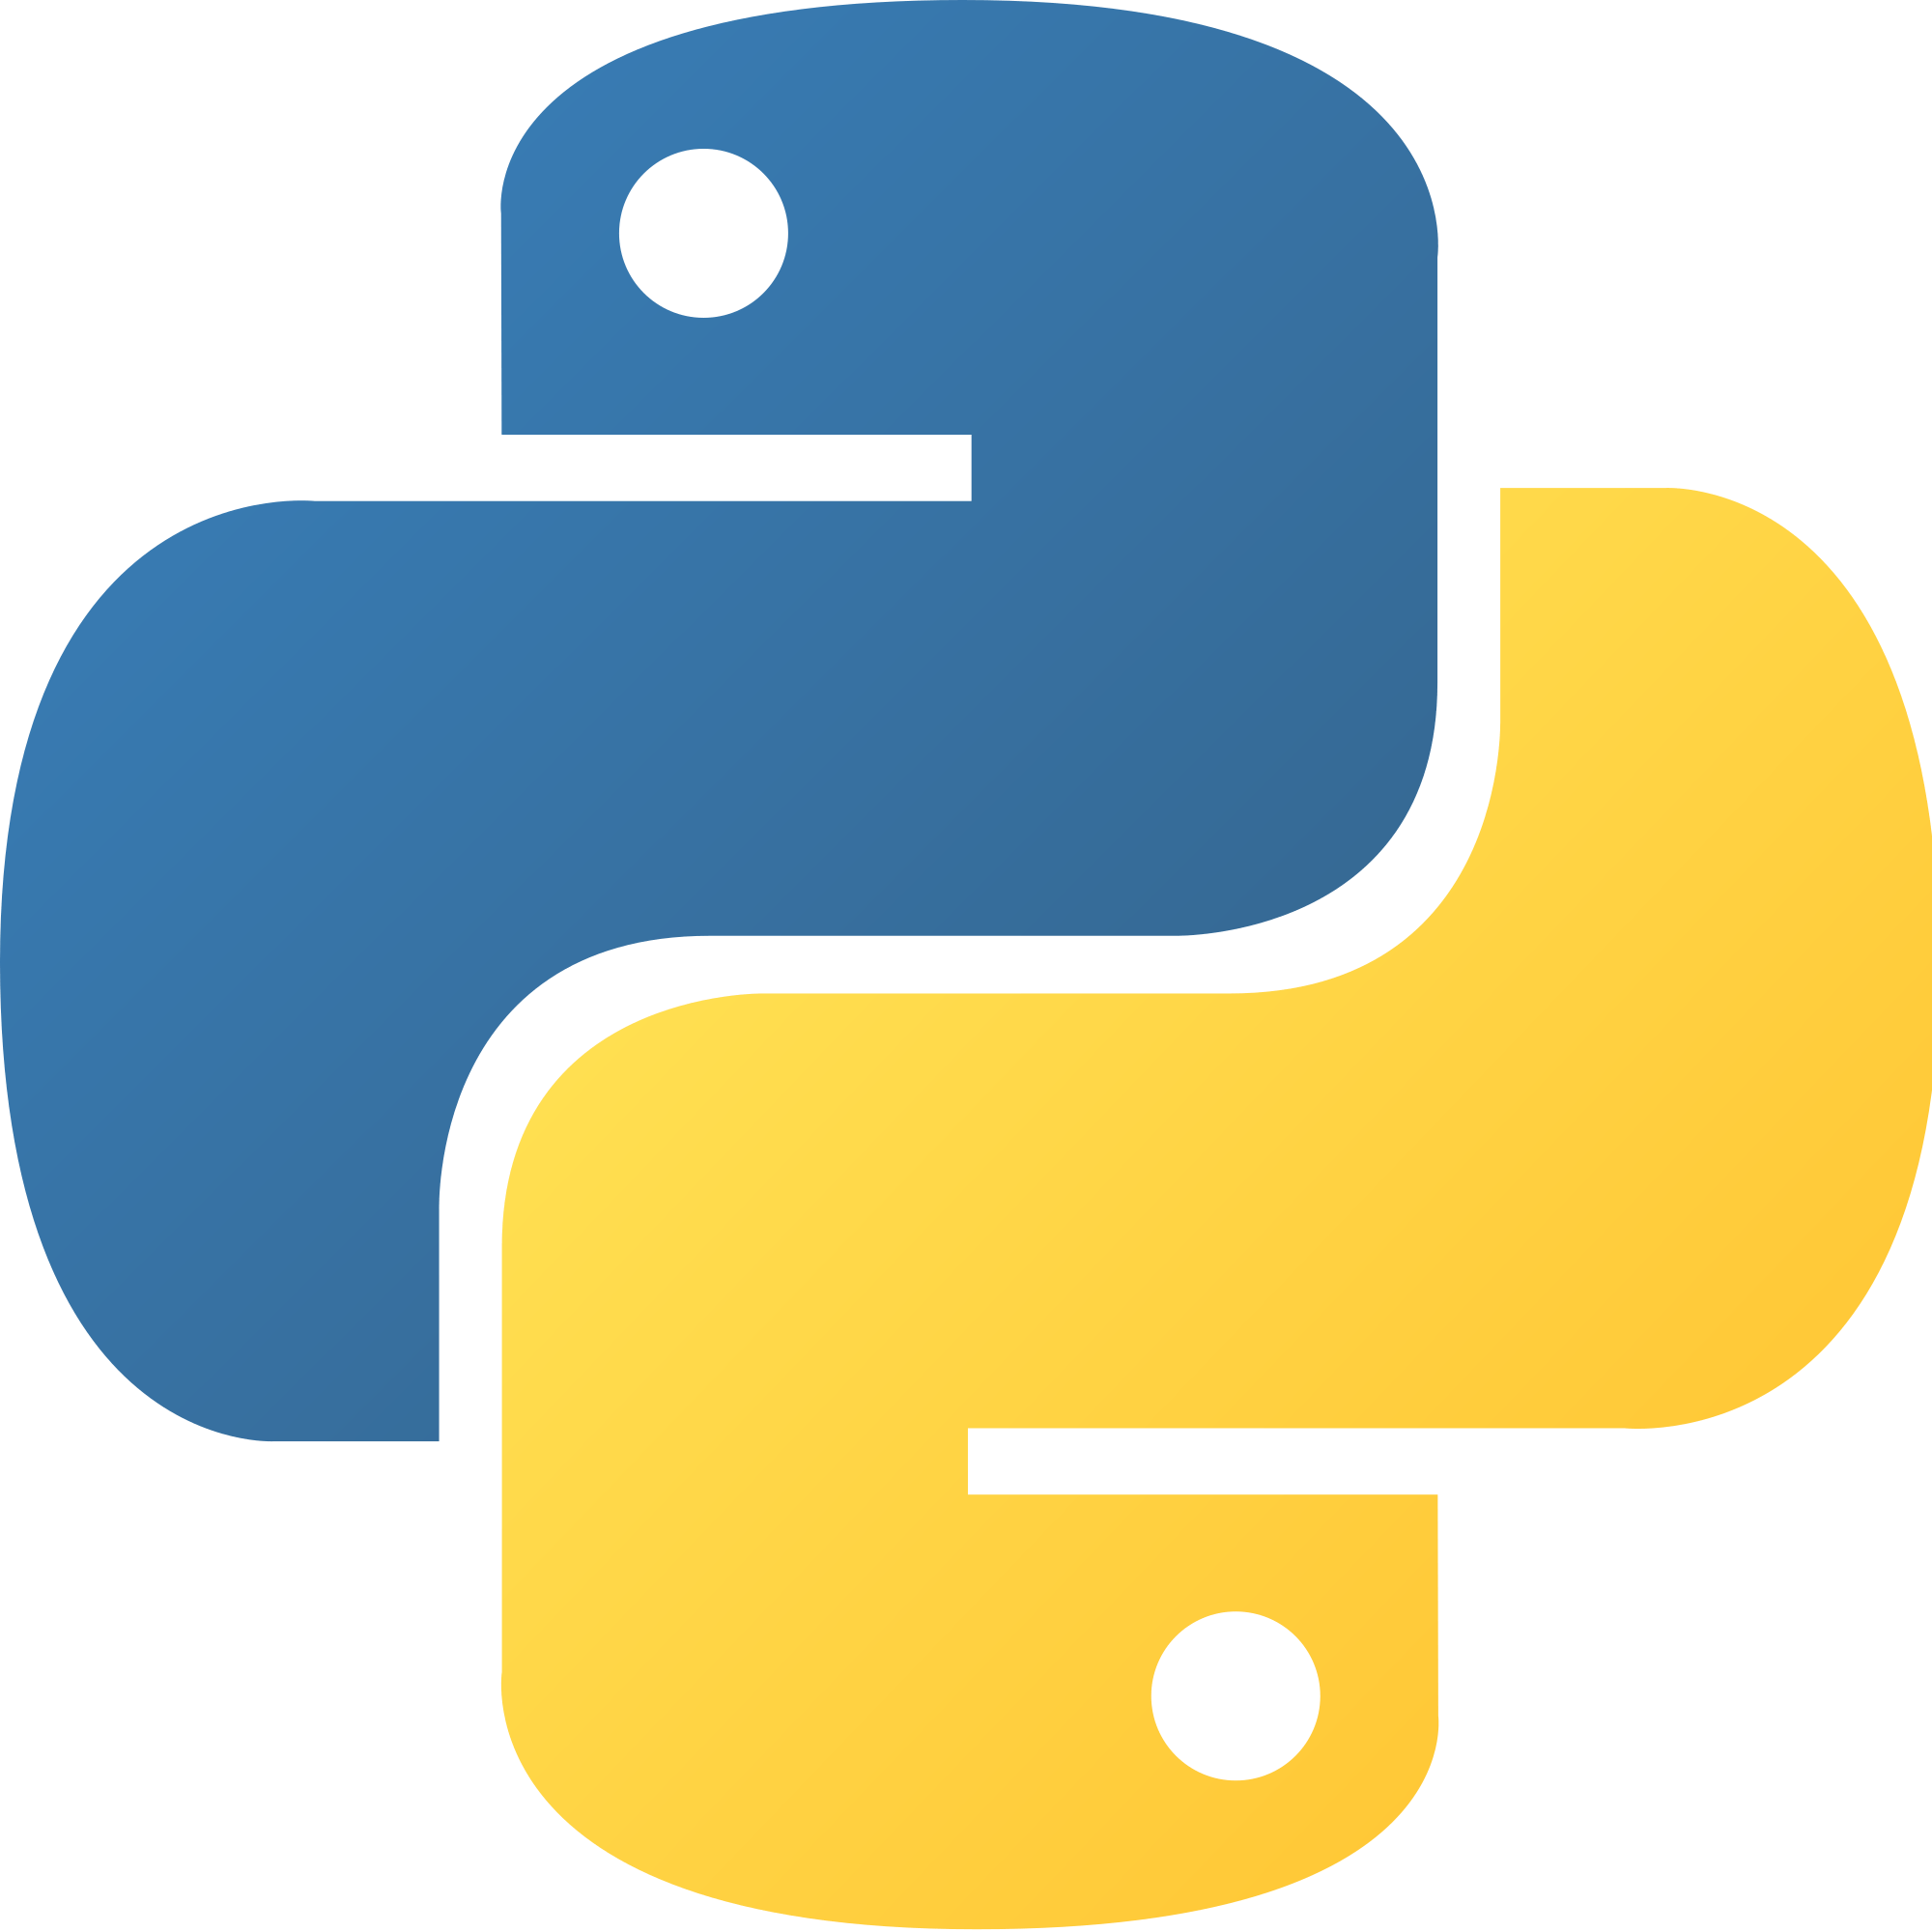 Python Logo - File:Python-logo-notext.svg - Wikimedia Commons